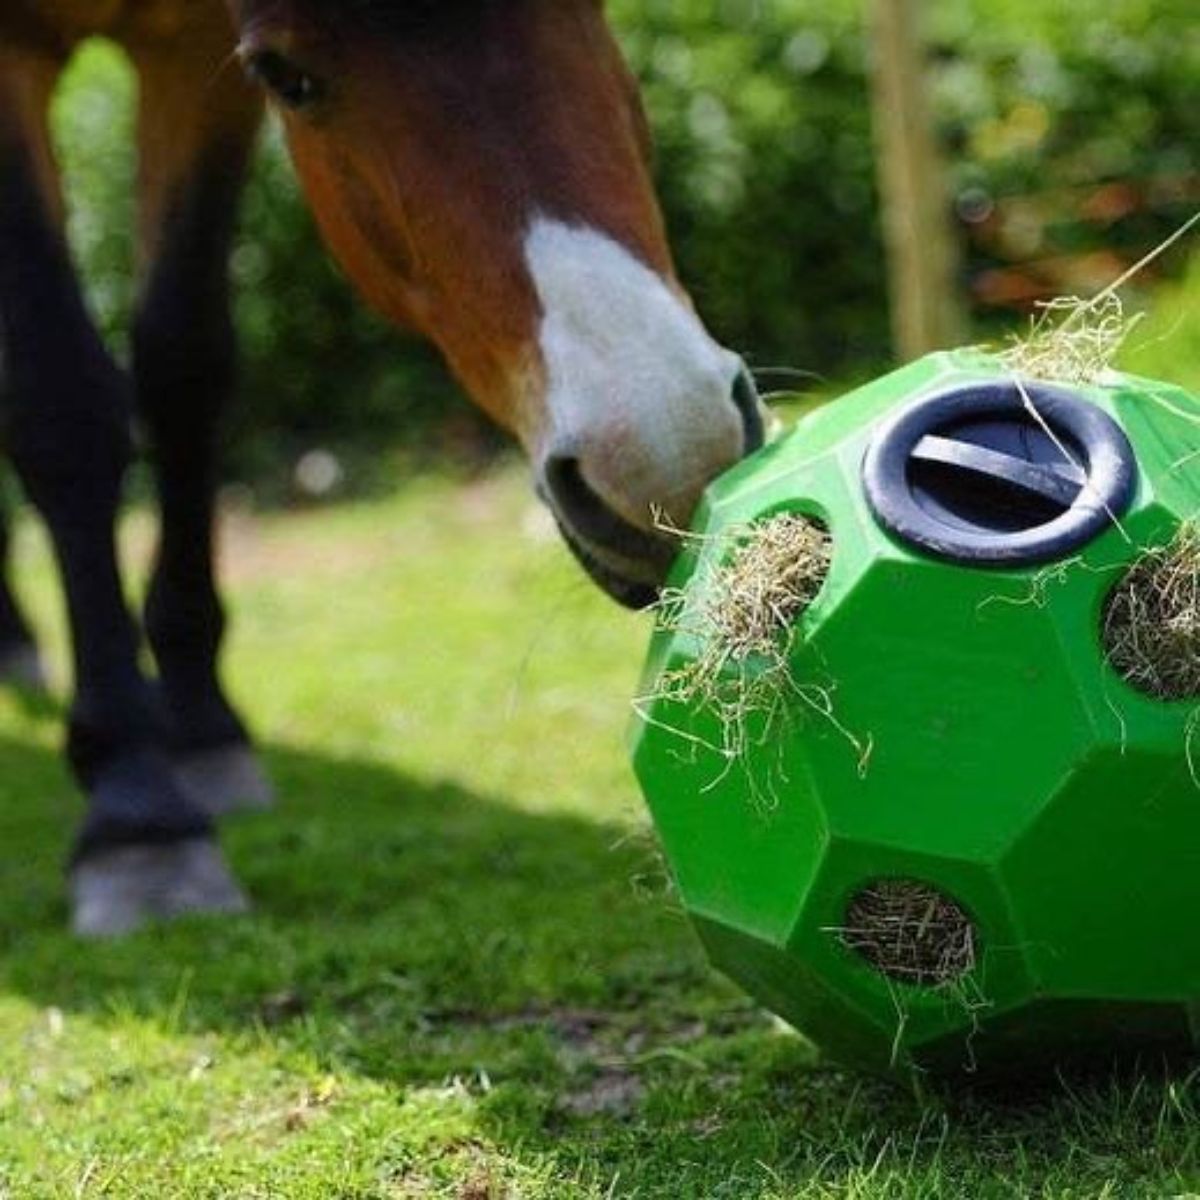 A brown horse grazes from a ball horse feeder.